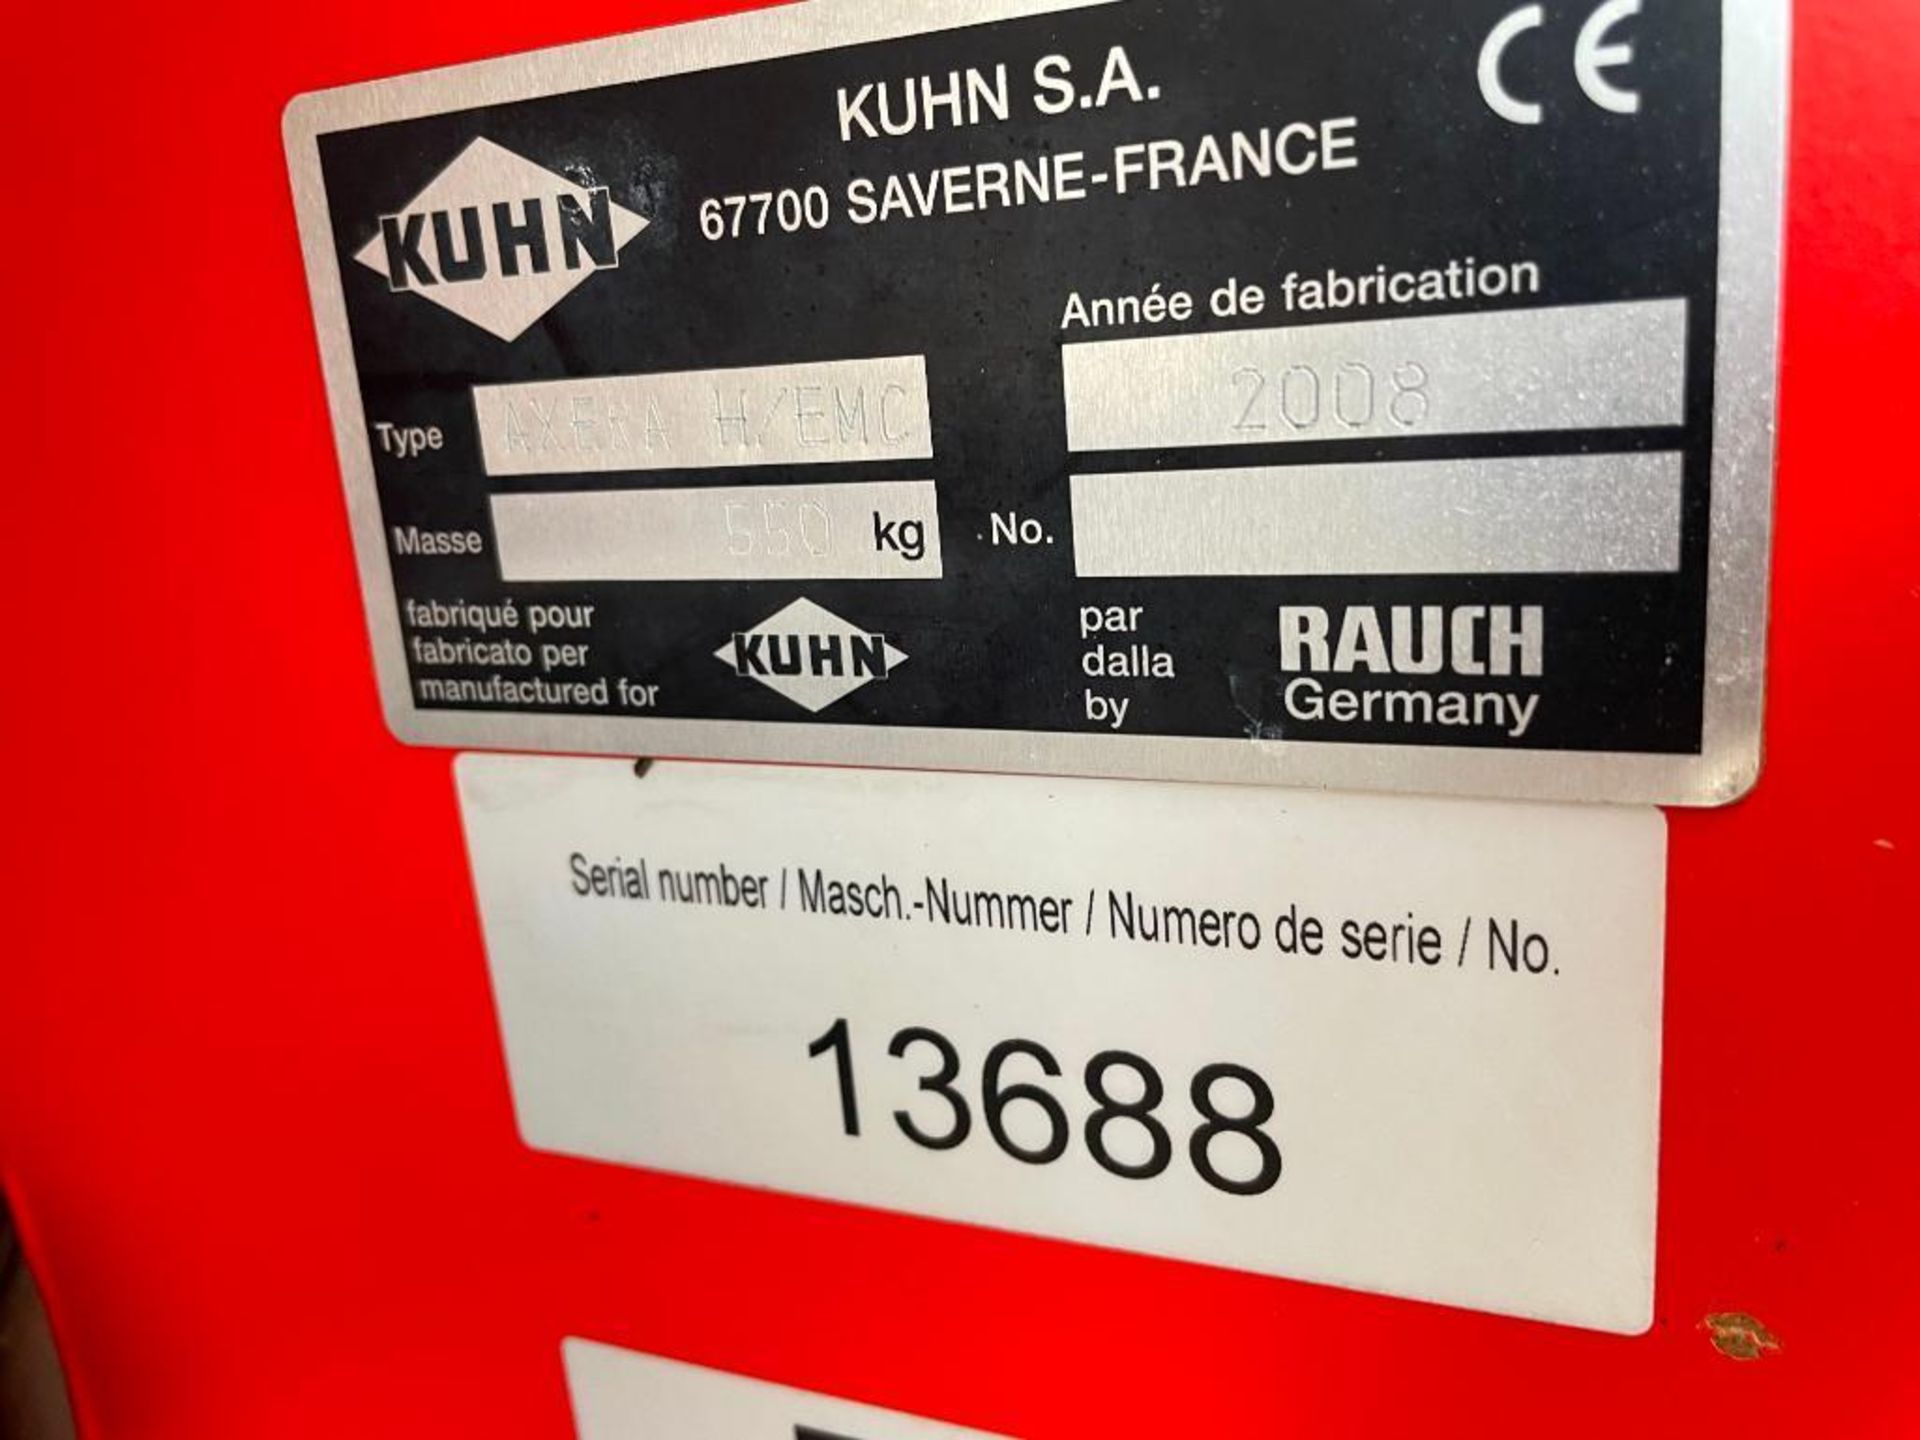 2008 Kuhn Axera HEMC 36m fertiliser spreader hydraulic driven with Quantram P control box and border - Image 10 of 11